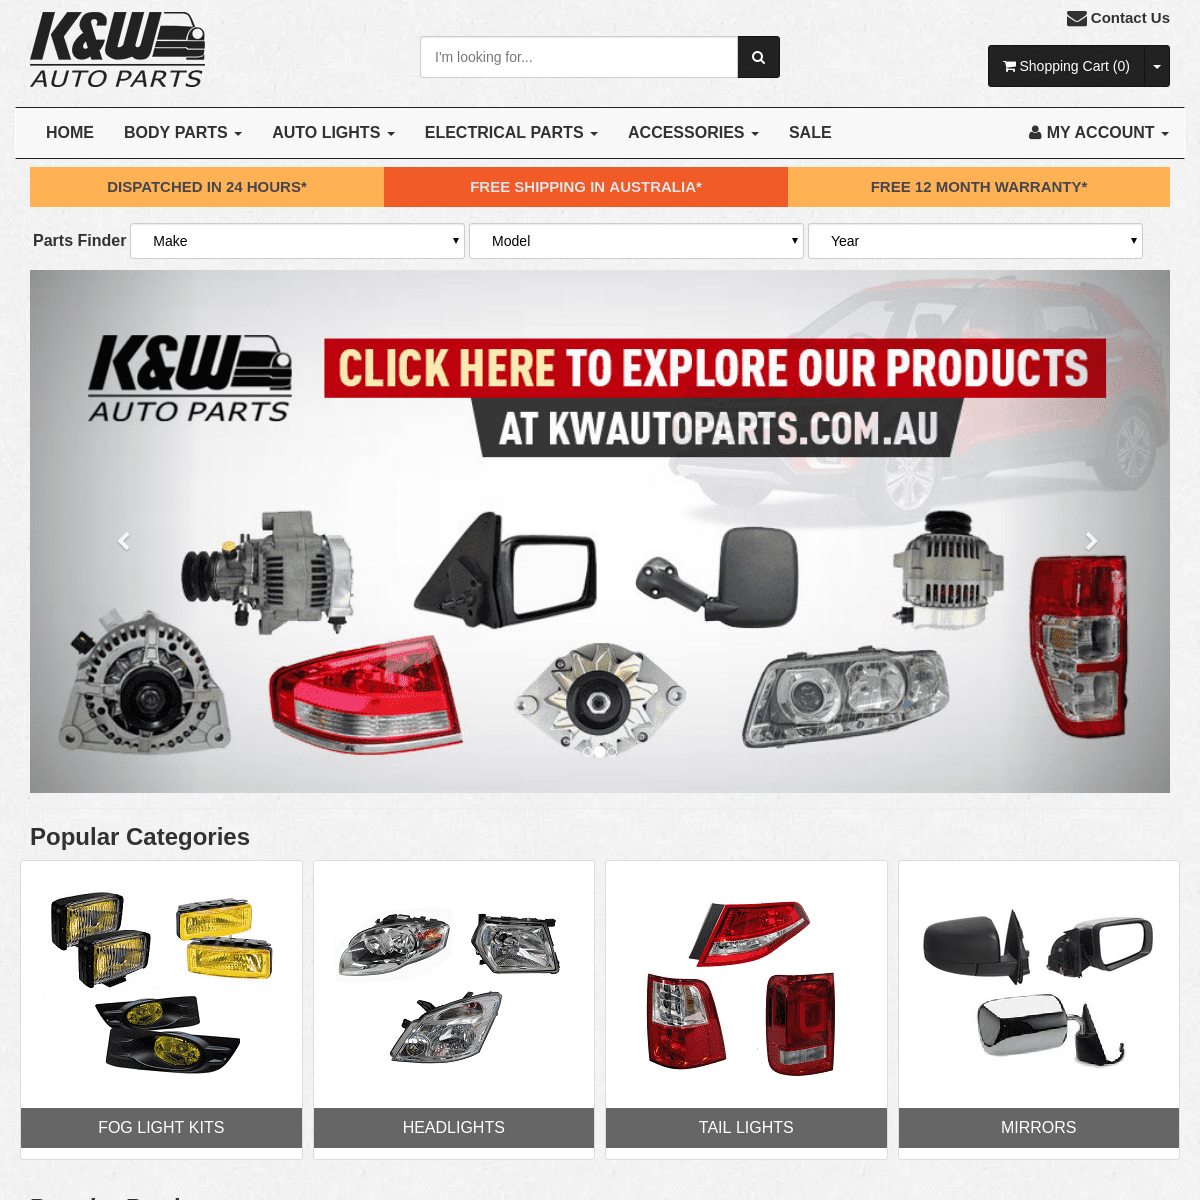 K&W Auto Parts | Trusted Online Auto Parts Store | Aftermarket Parts | Accessories